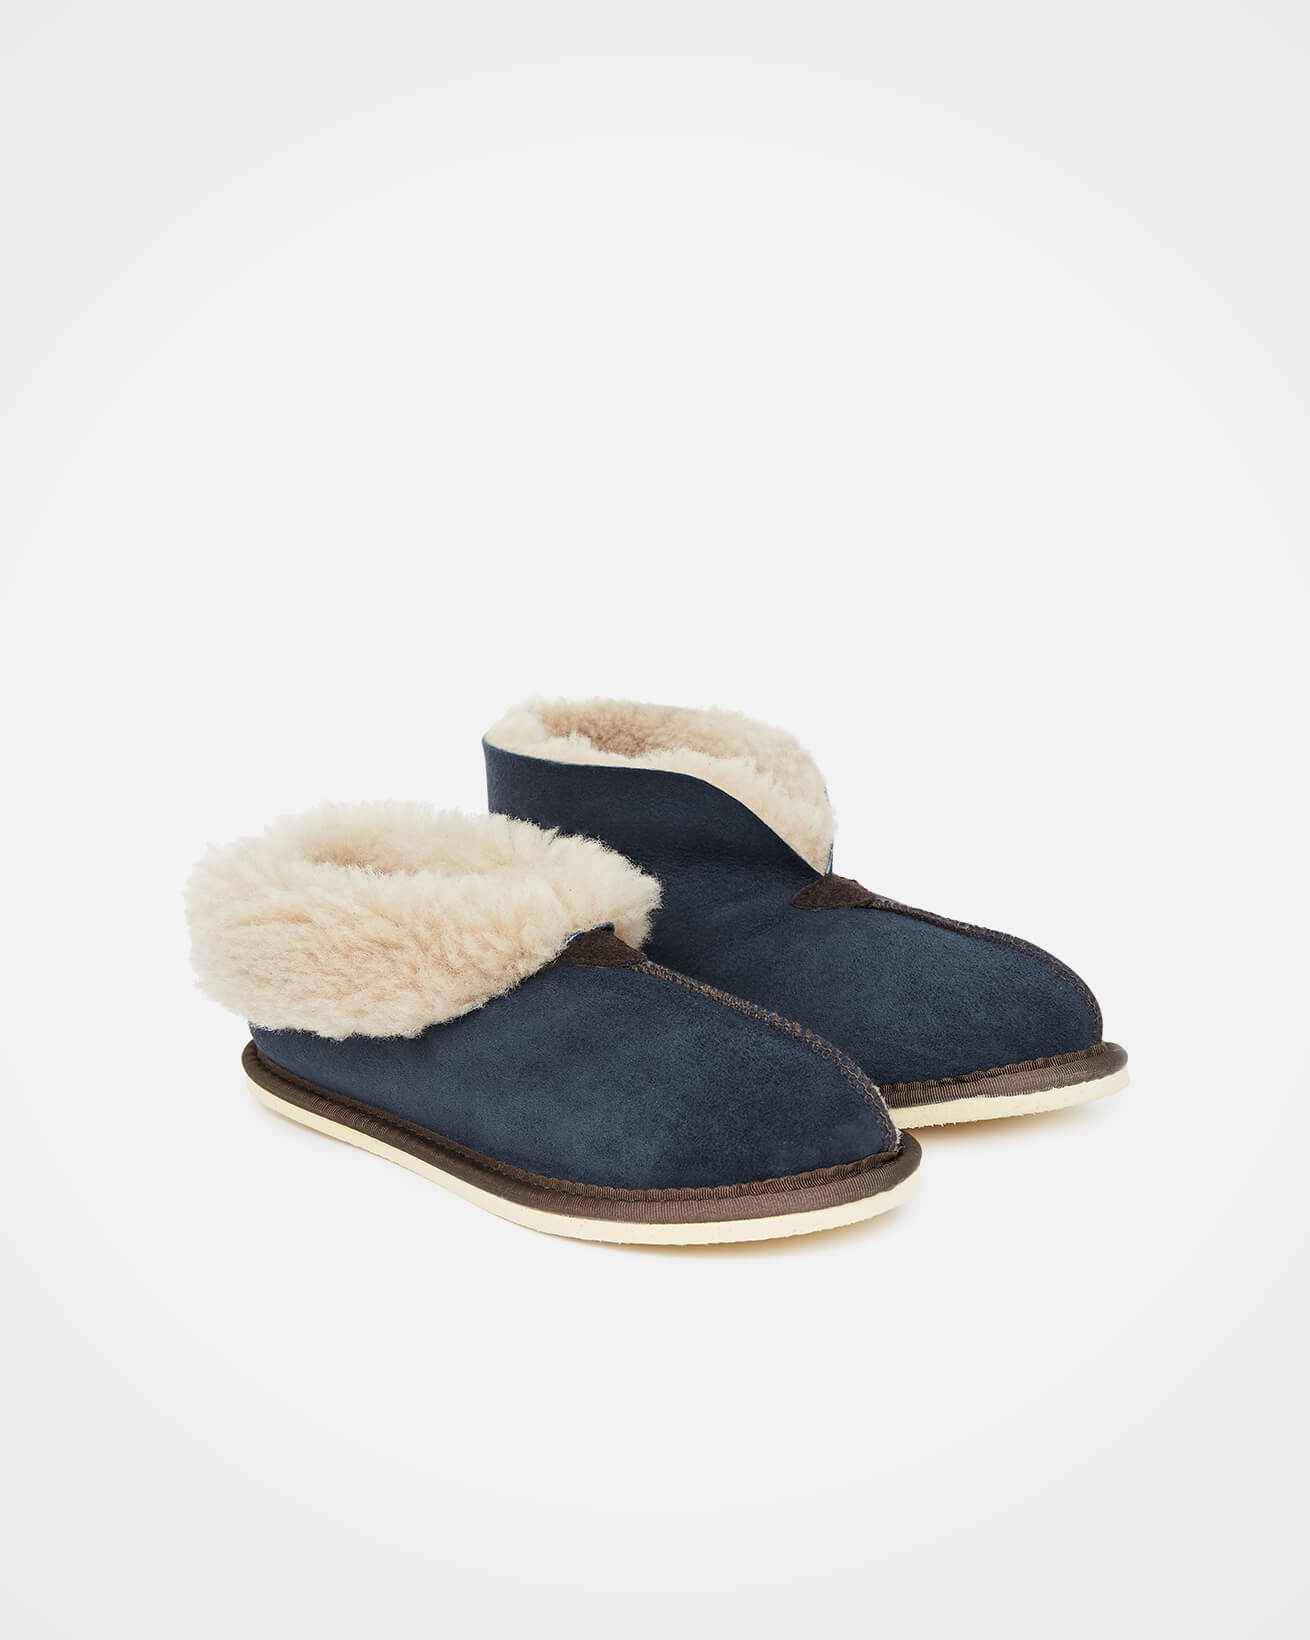 2100_ladies-sheepskin-bootee-slippers_blue-iris_pair-2_v2_web.jpg